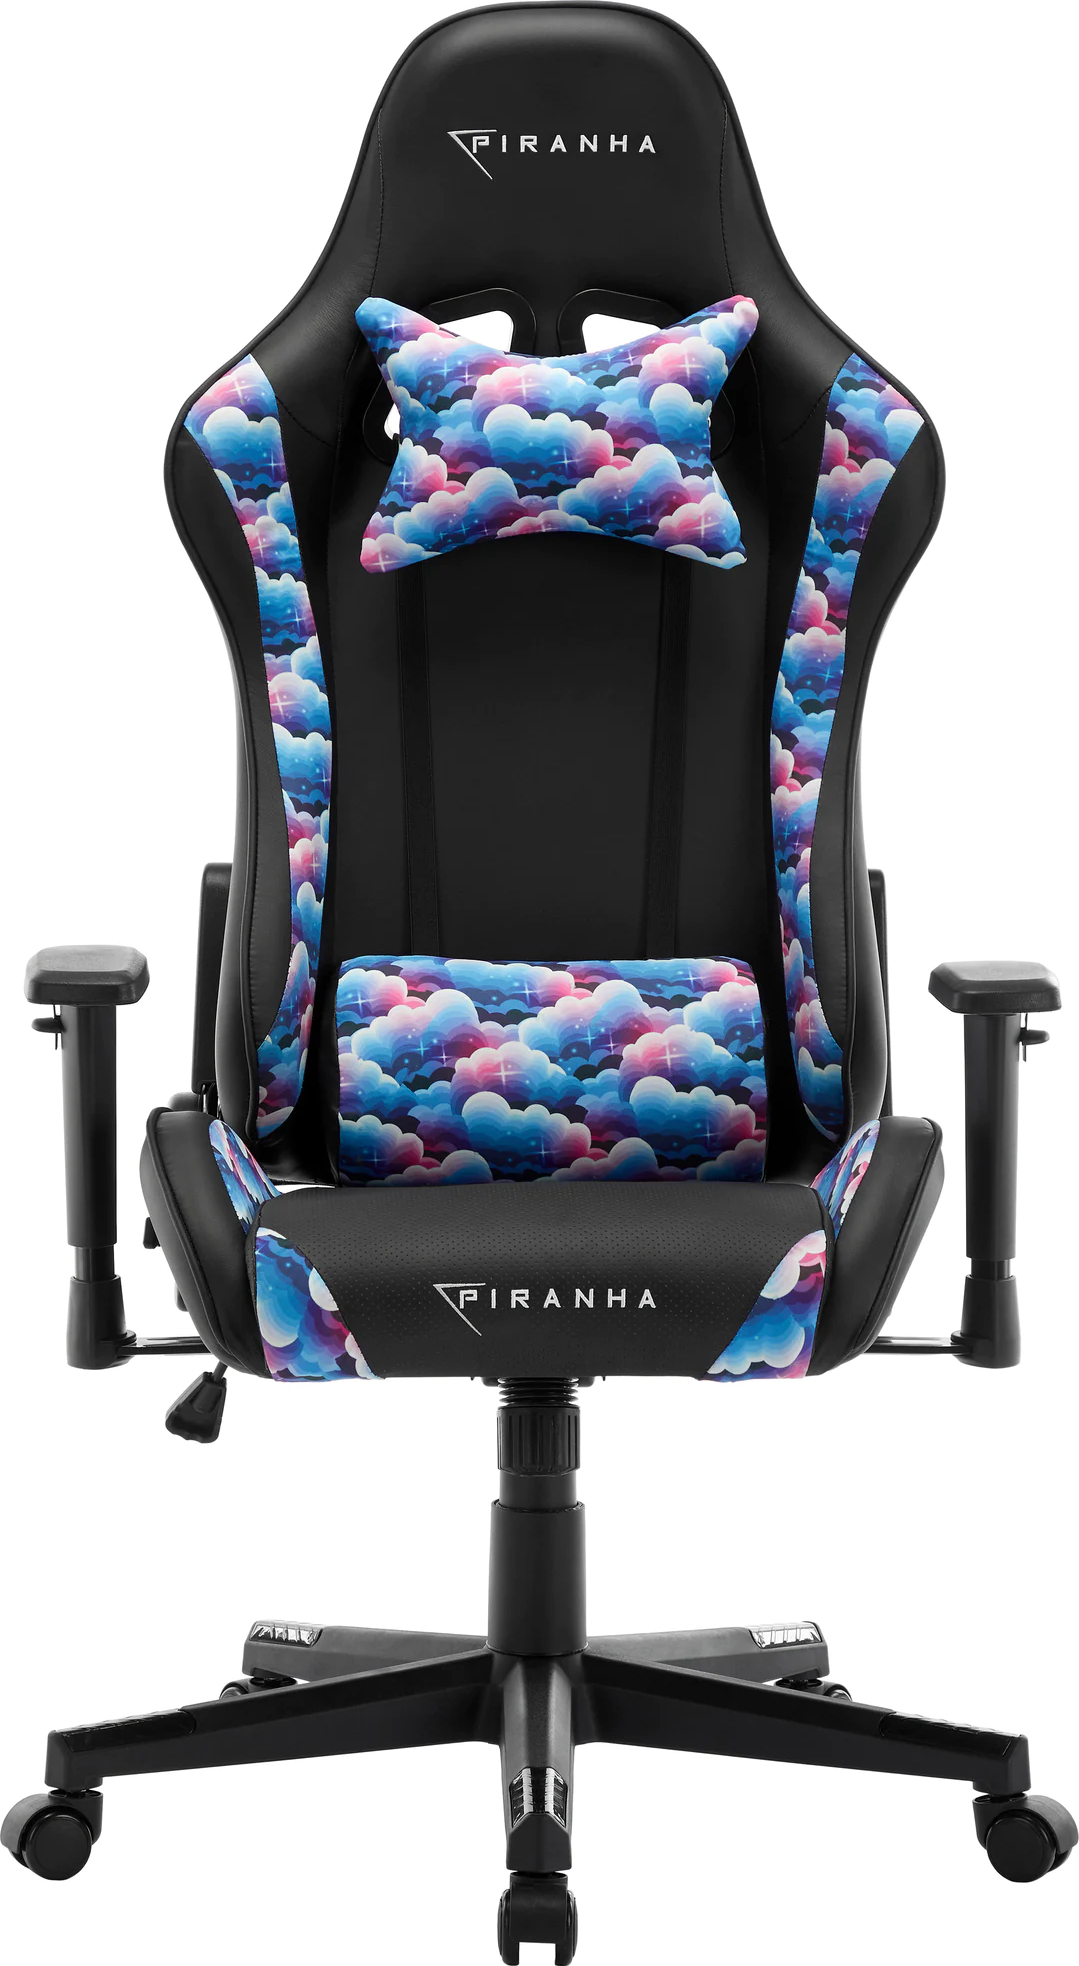  Bild på Piranha Bite Gaming Chair - Purple Clouds gamingstol